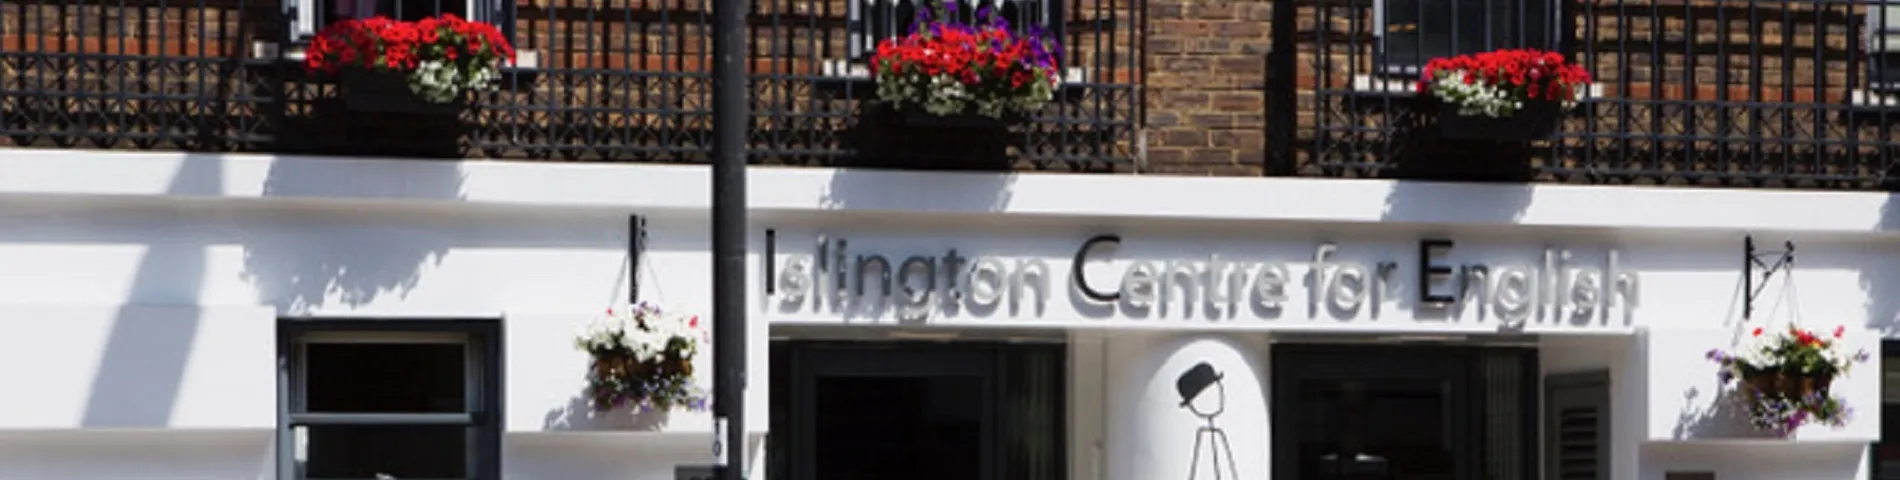 Islington Centre for English kuva 1